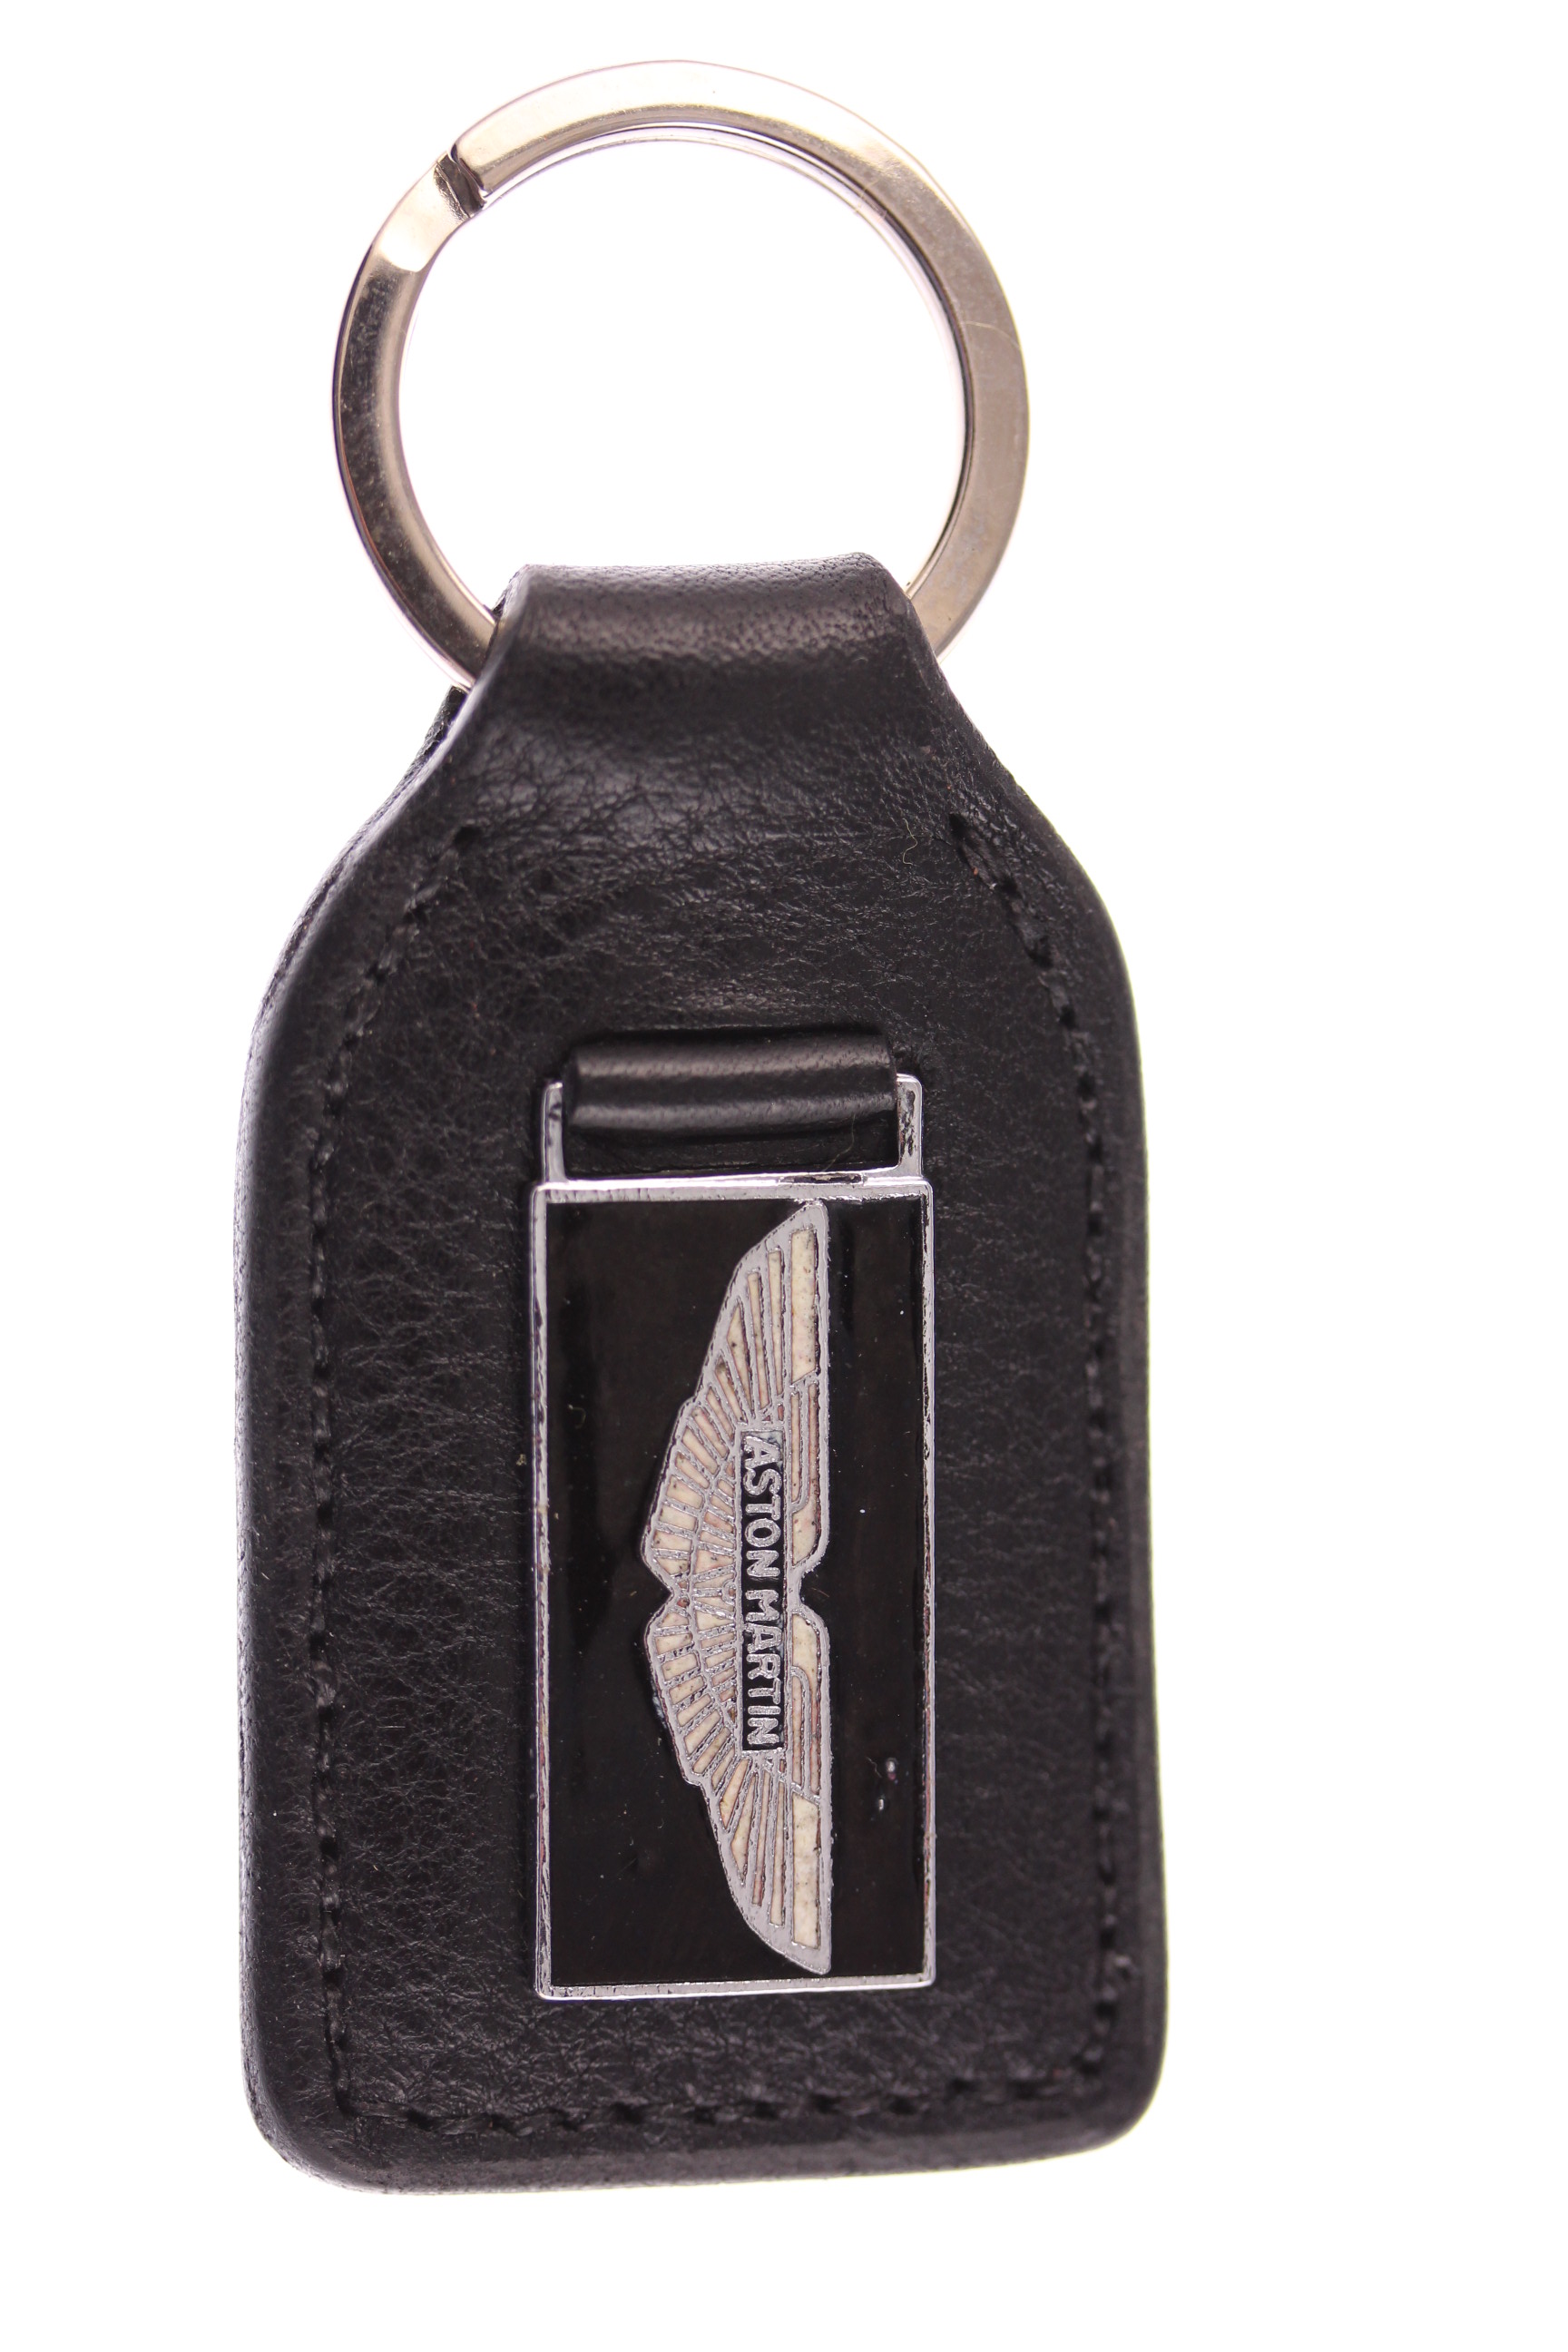 Aston Martin key rings